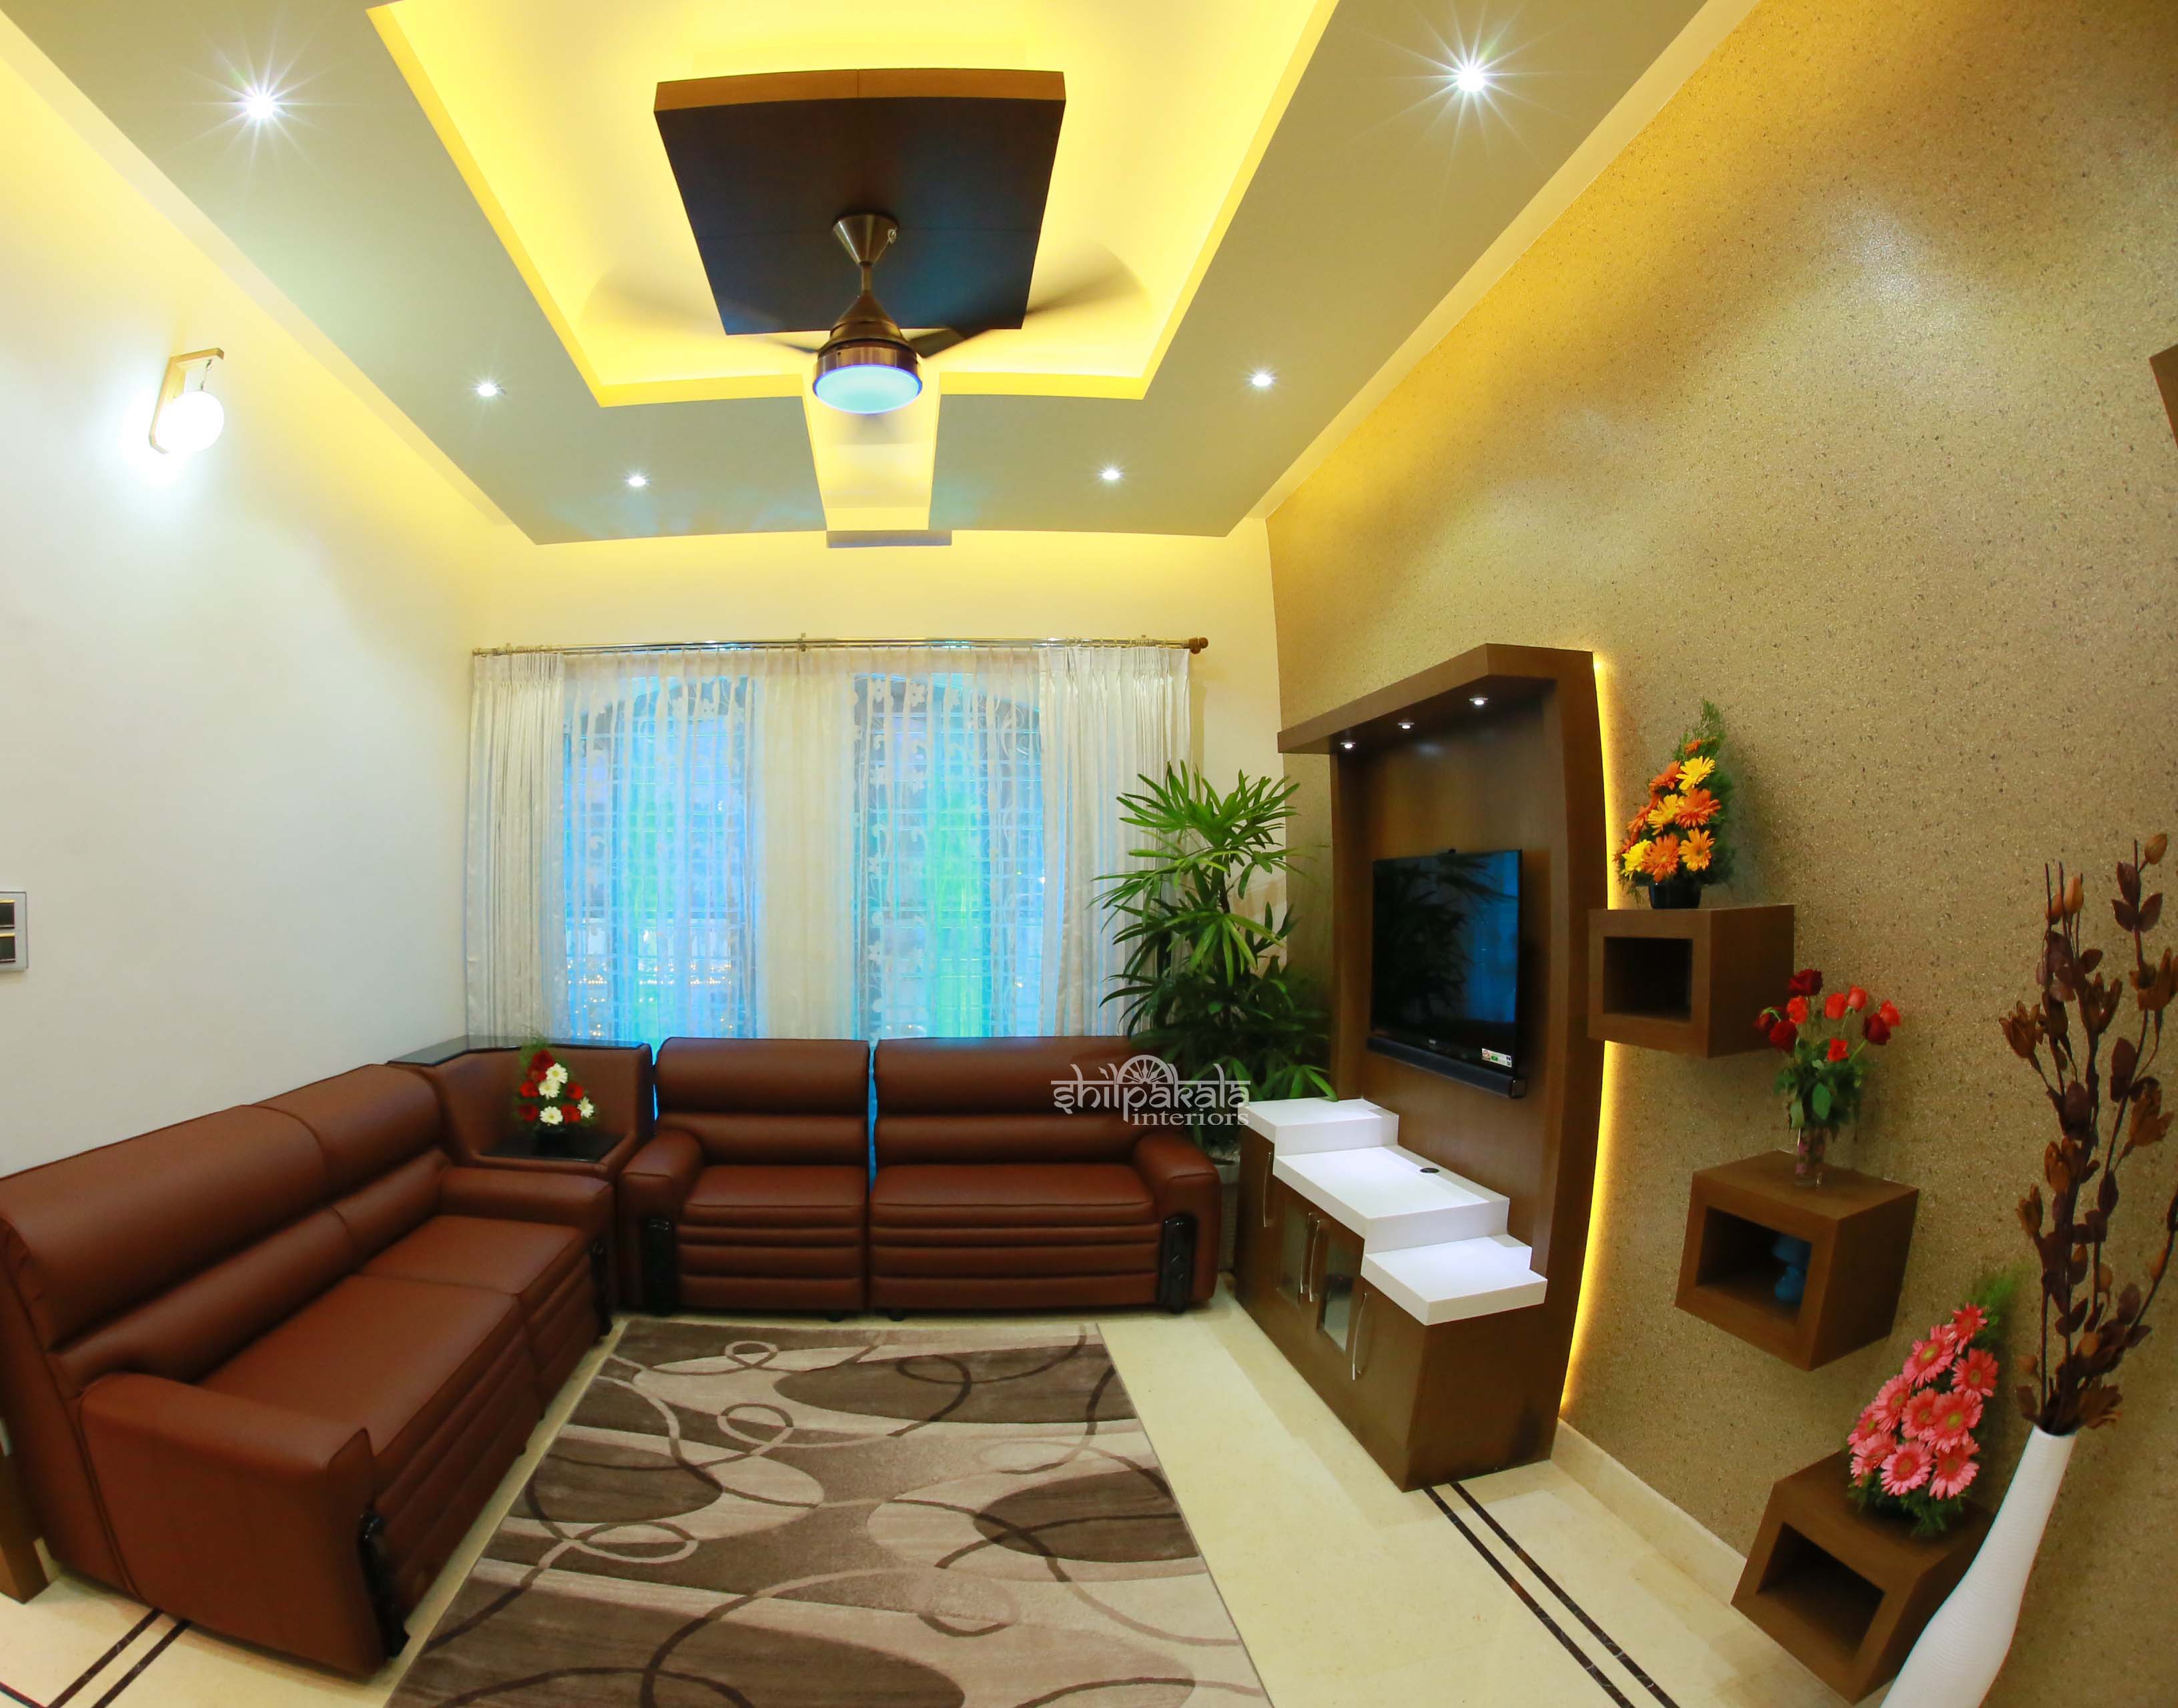 Shilpakala Interiors Home Interiors Images Gallery